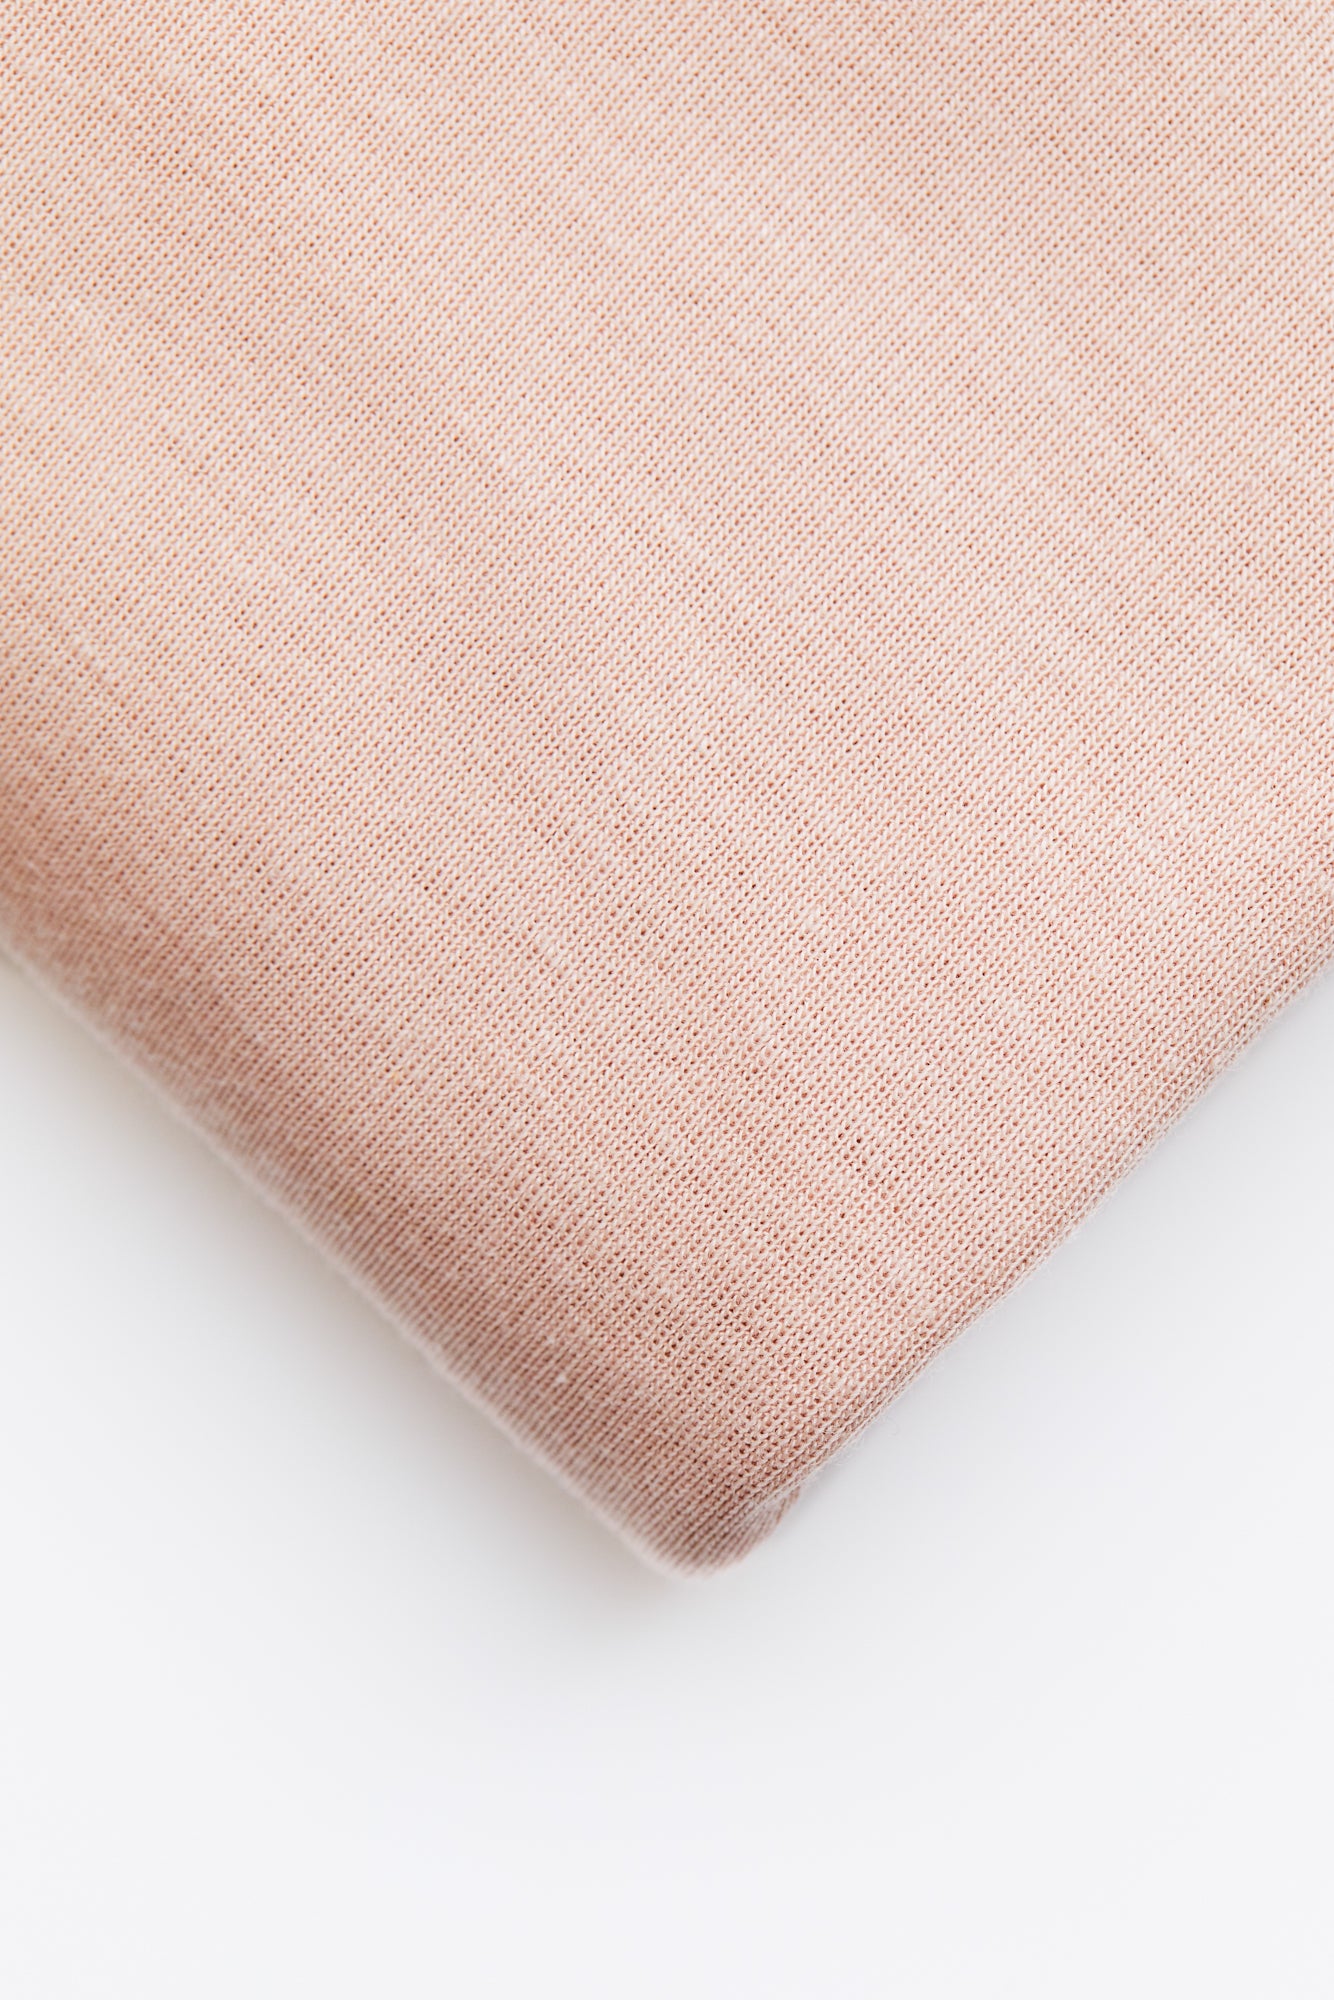 Close up of powder pink organic cotton and tencel knit jersey sewing fabric 